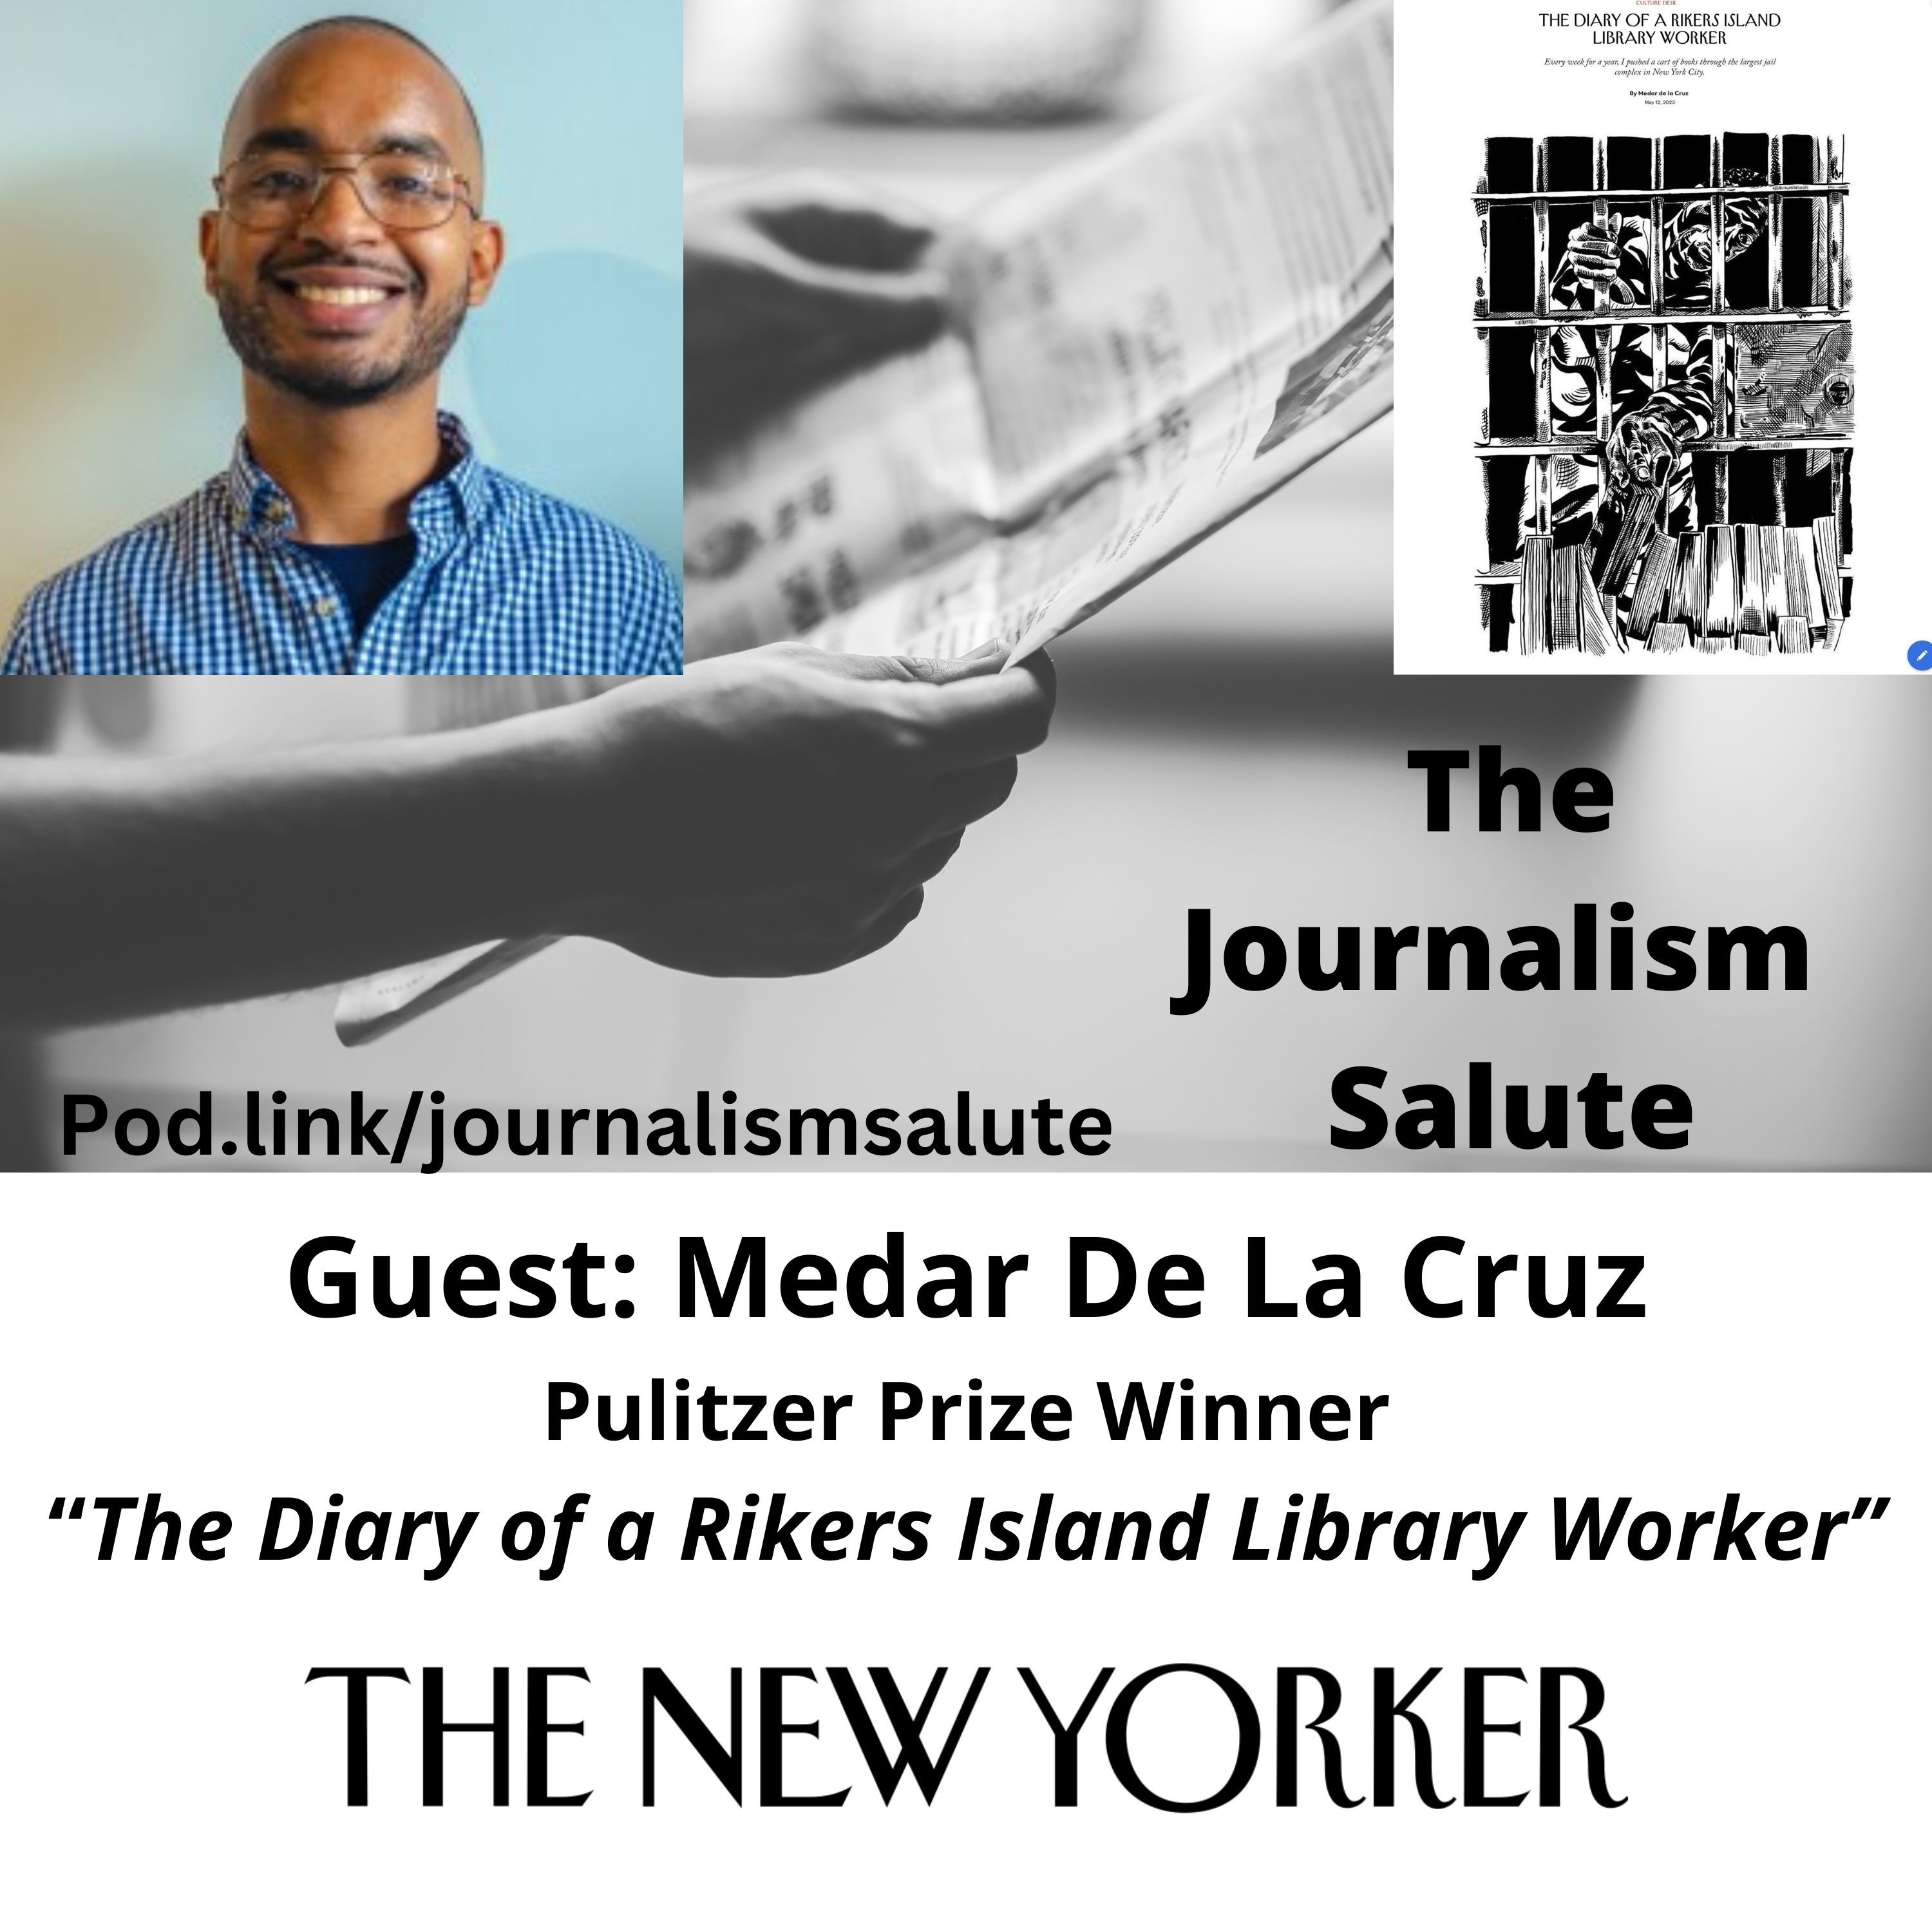 Pulitzer Prize winner Medar De La Cruz